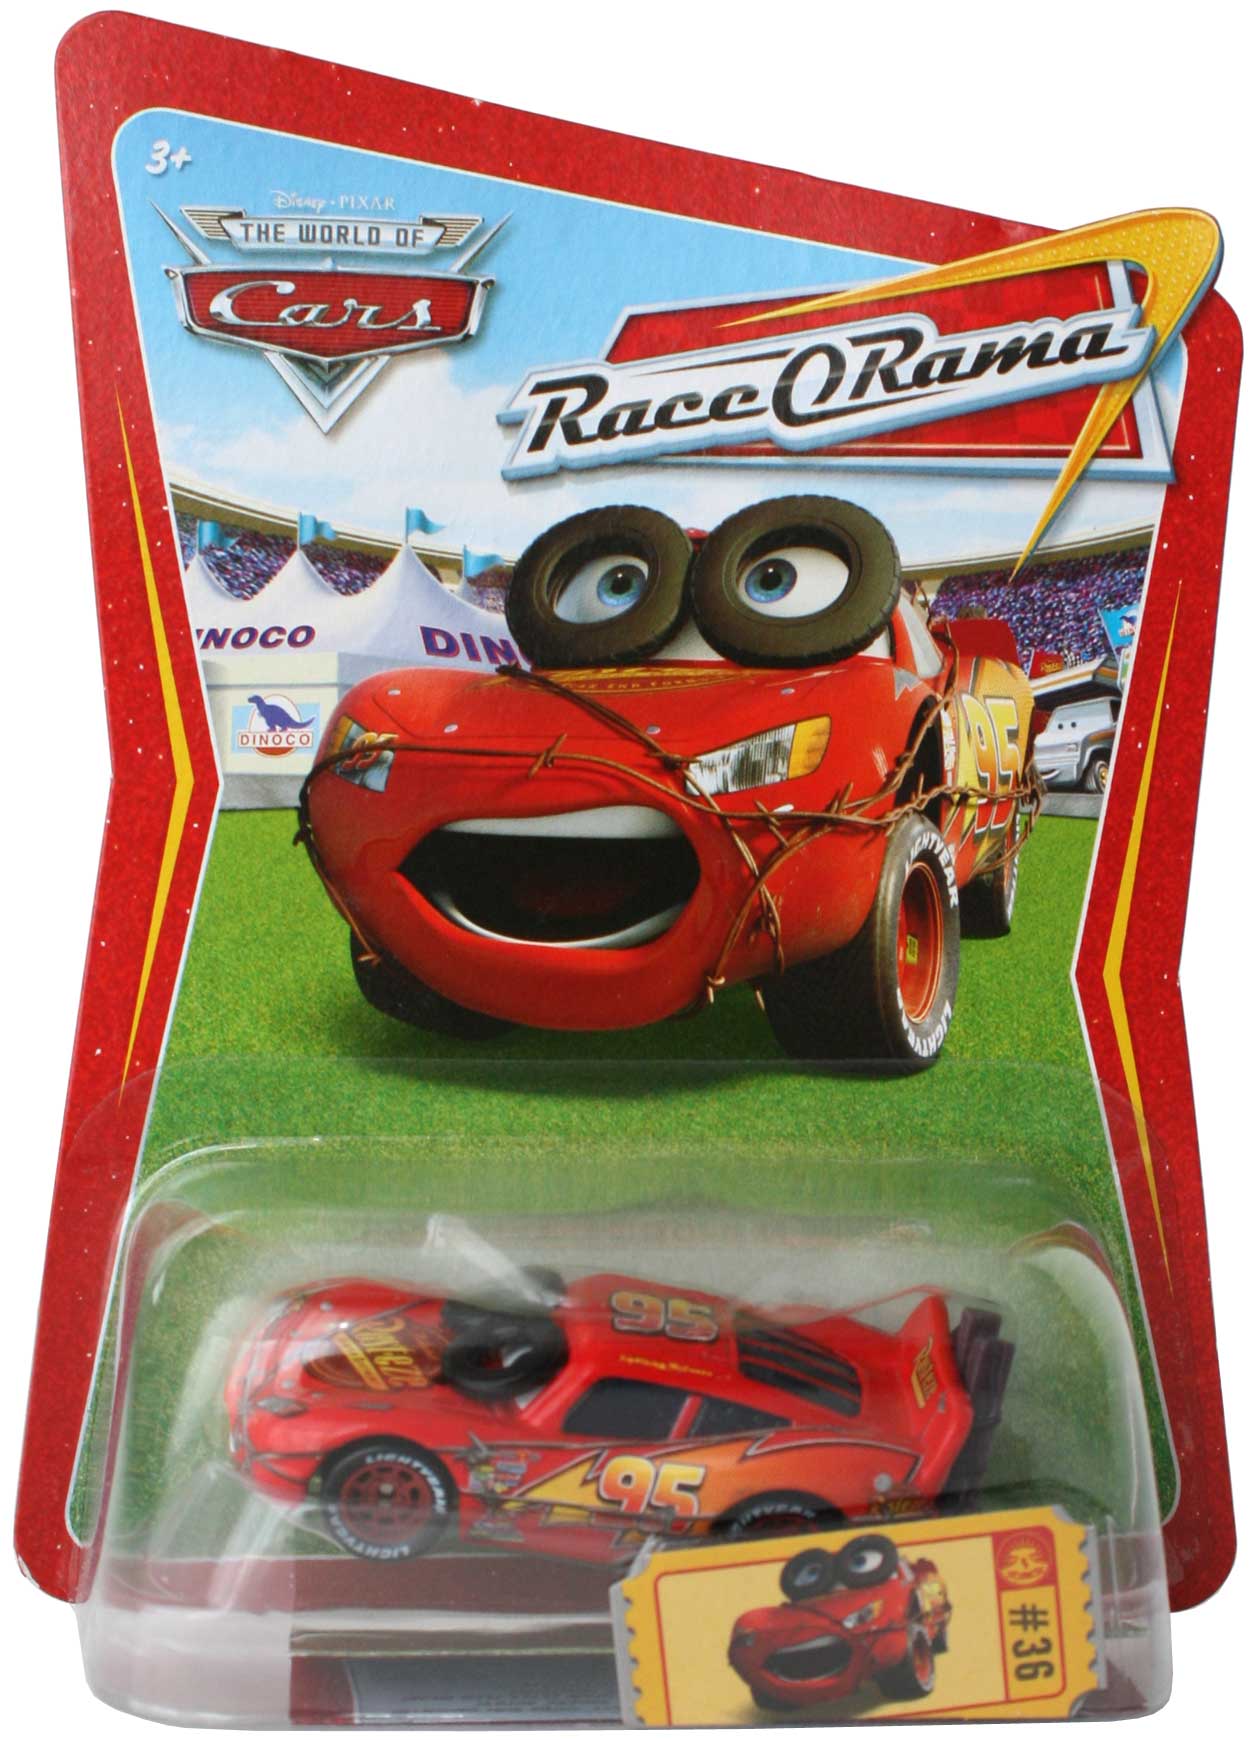 Collection Mattel : Race-O-Rama (2009)